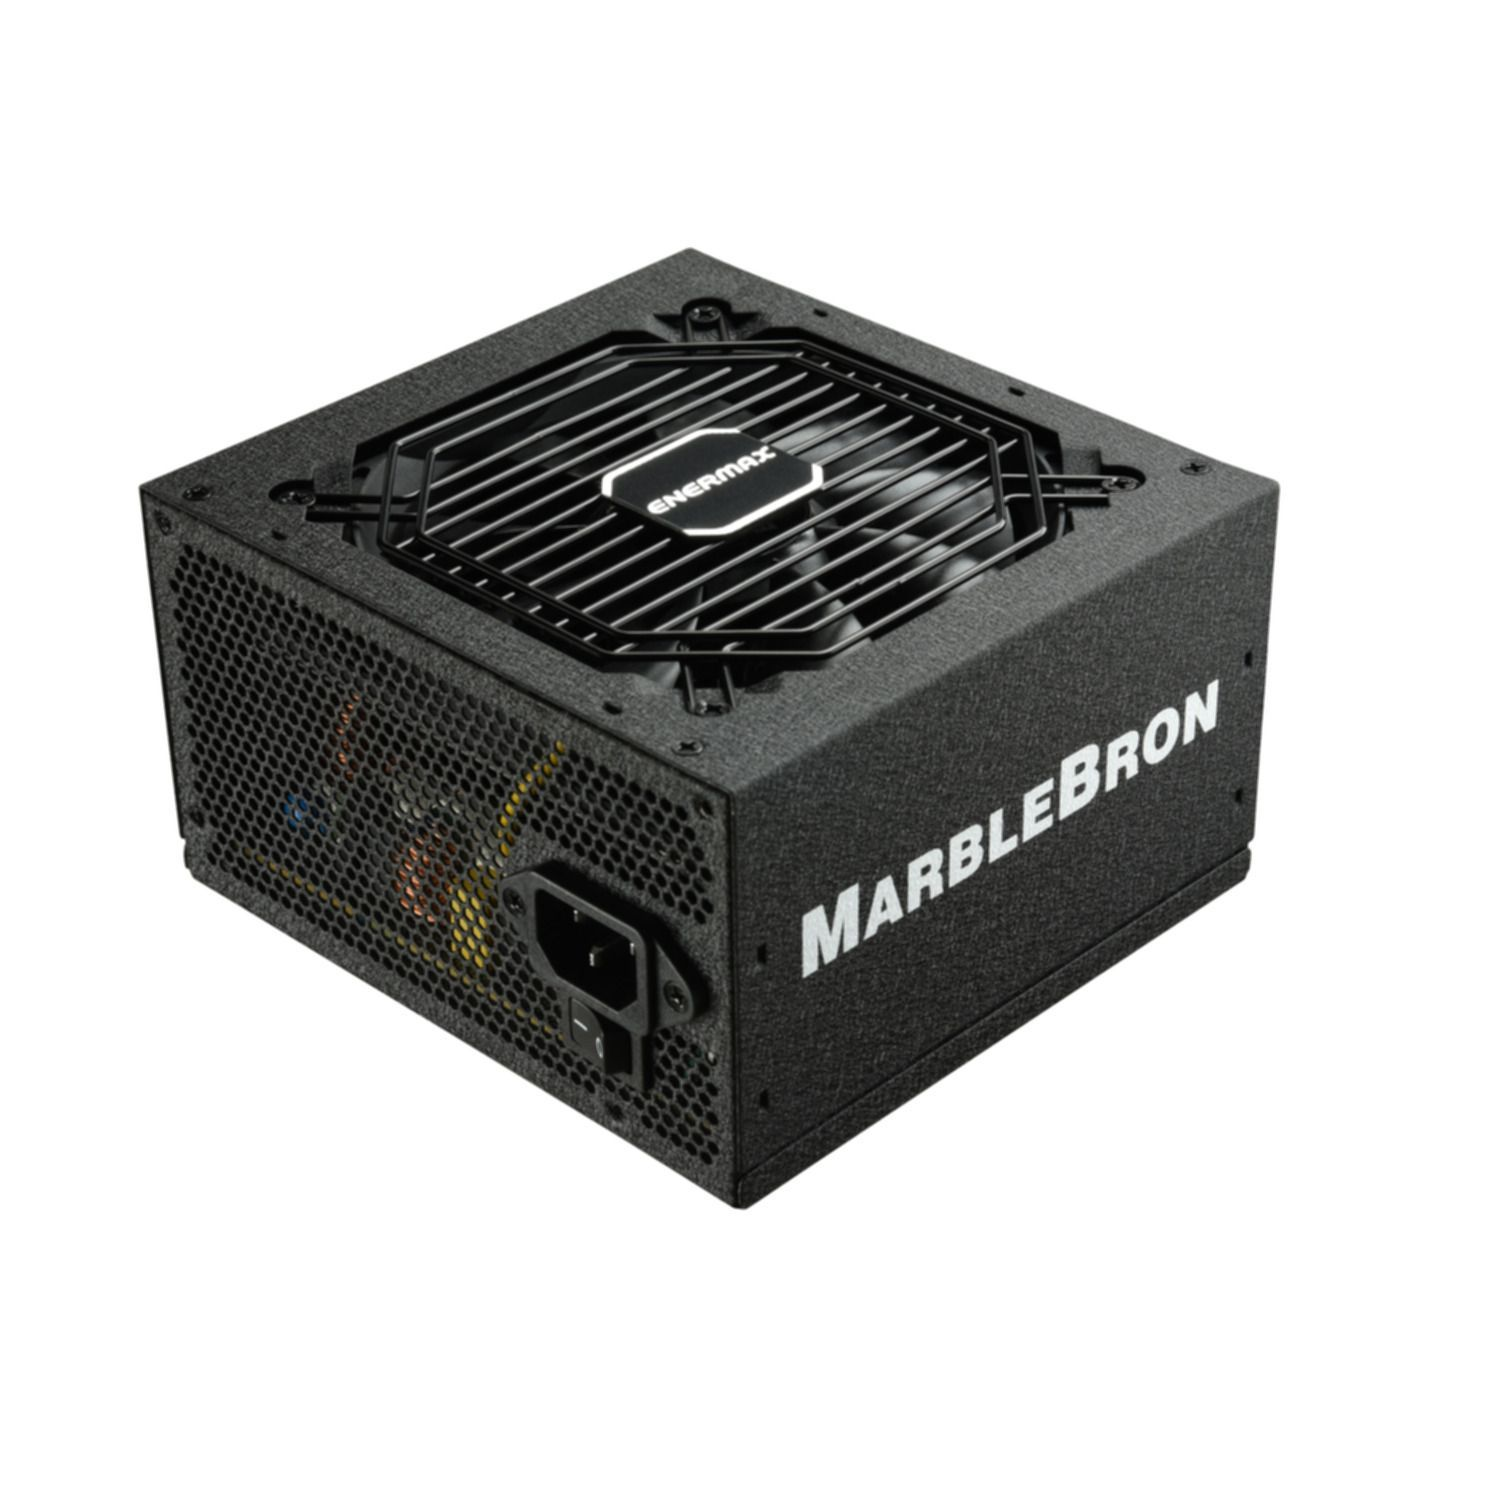 MARBLEBRON PC ENERMAX Netzteil 750 Watt